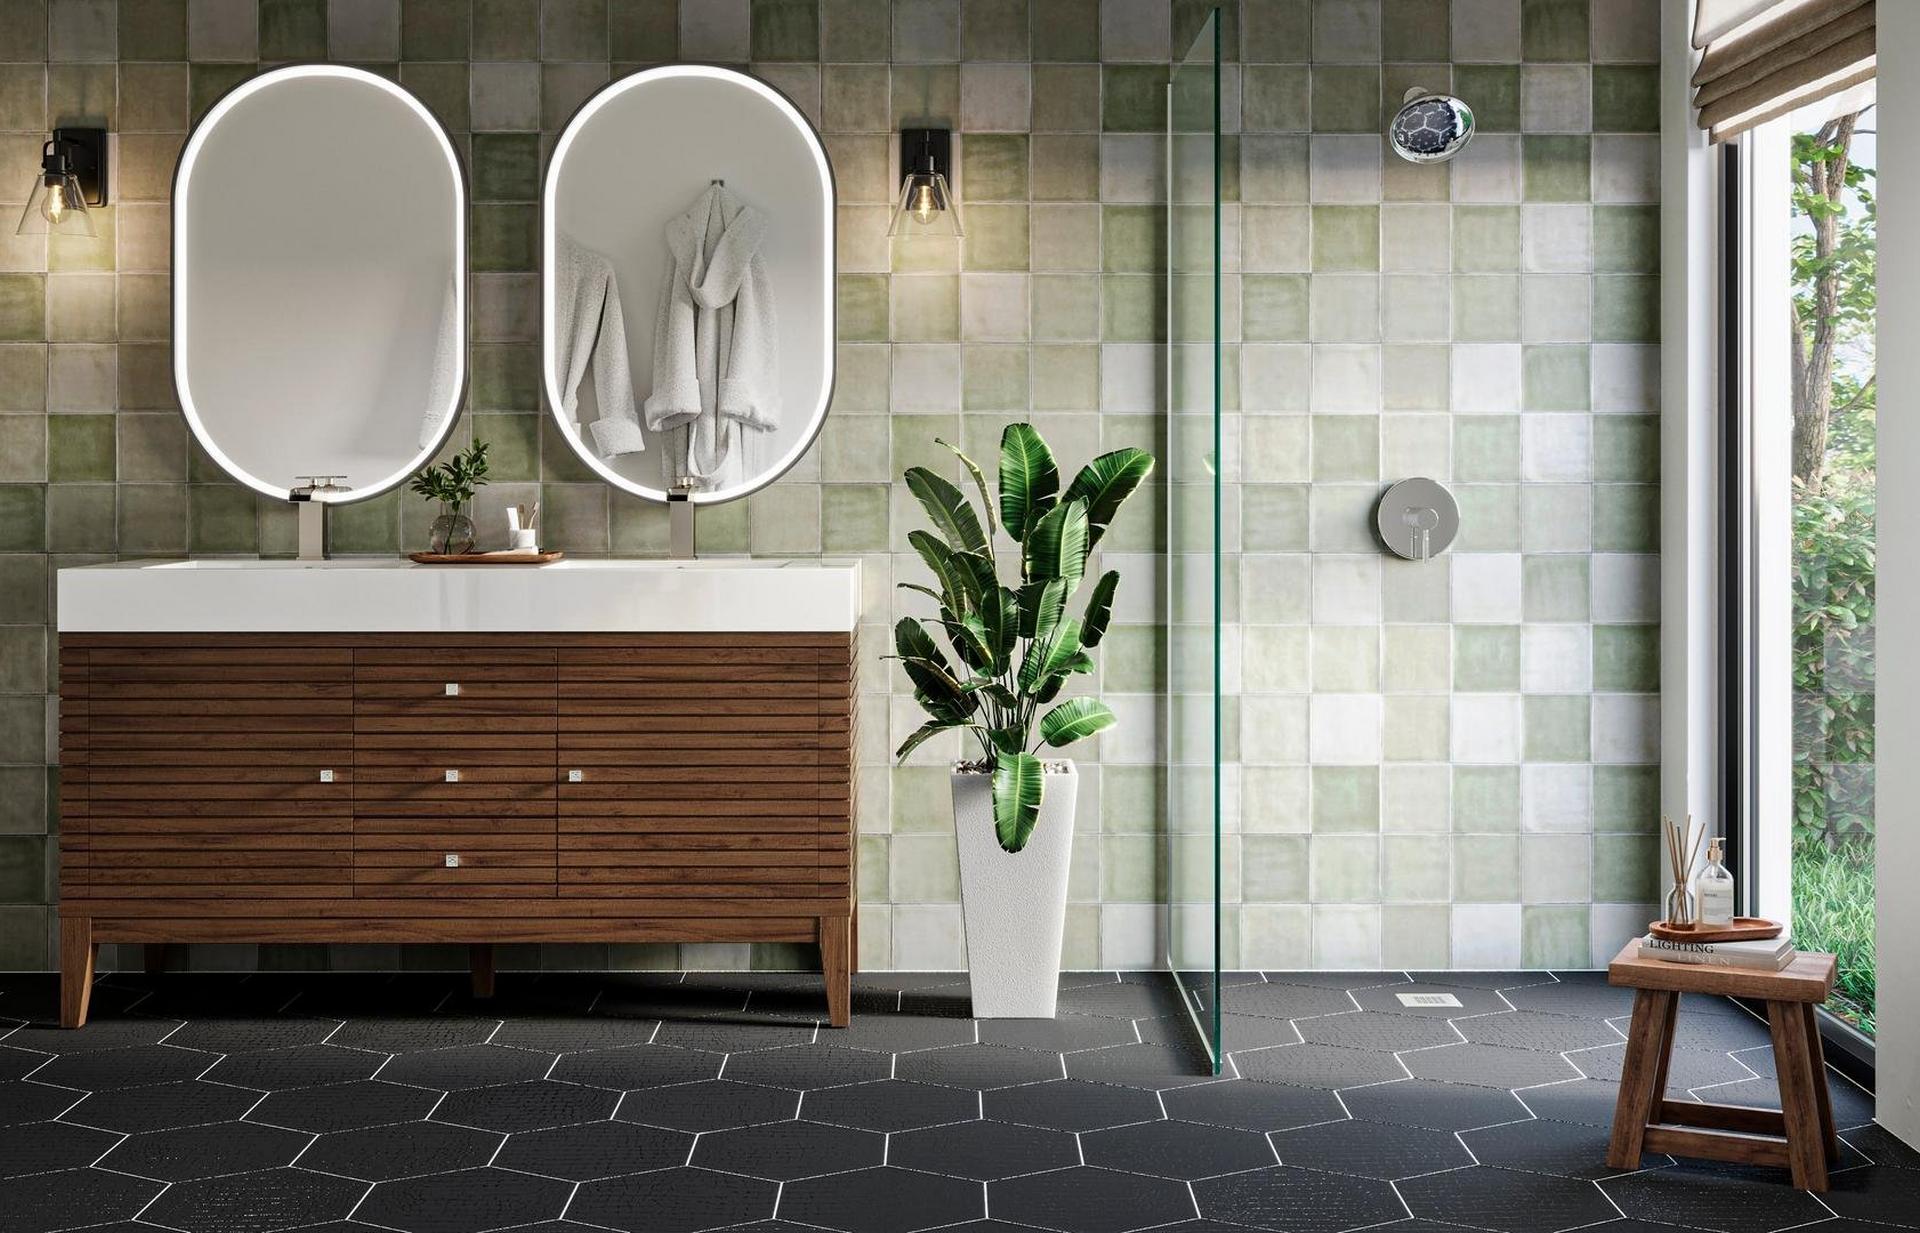 Bathroom with green wall tile, black floor tile, and marble top wood vanity